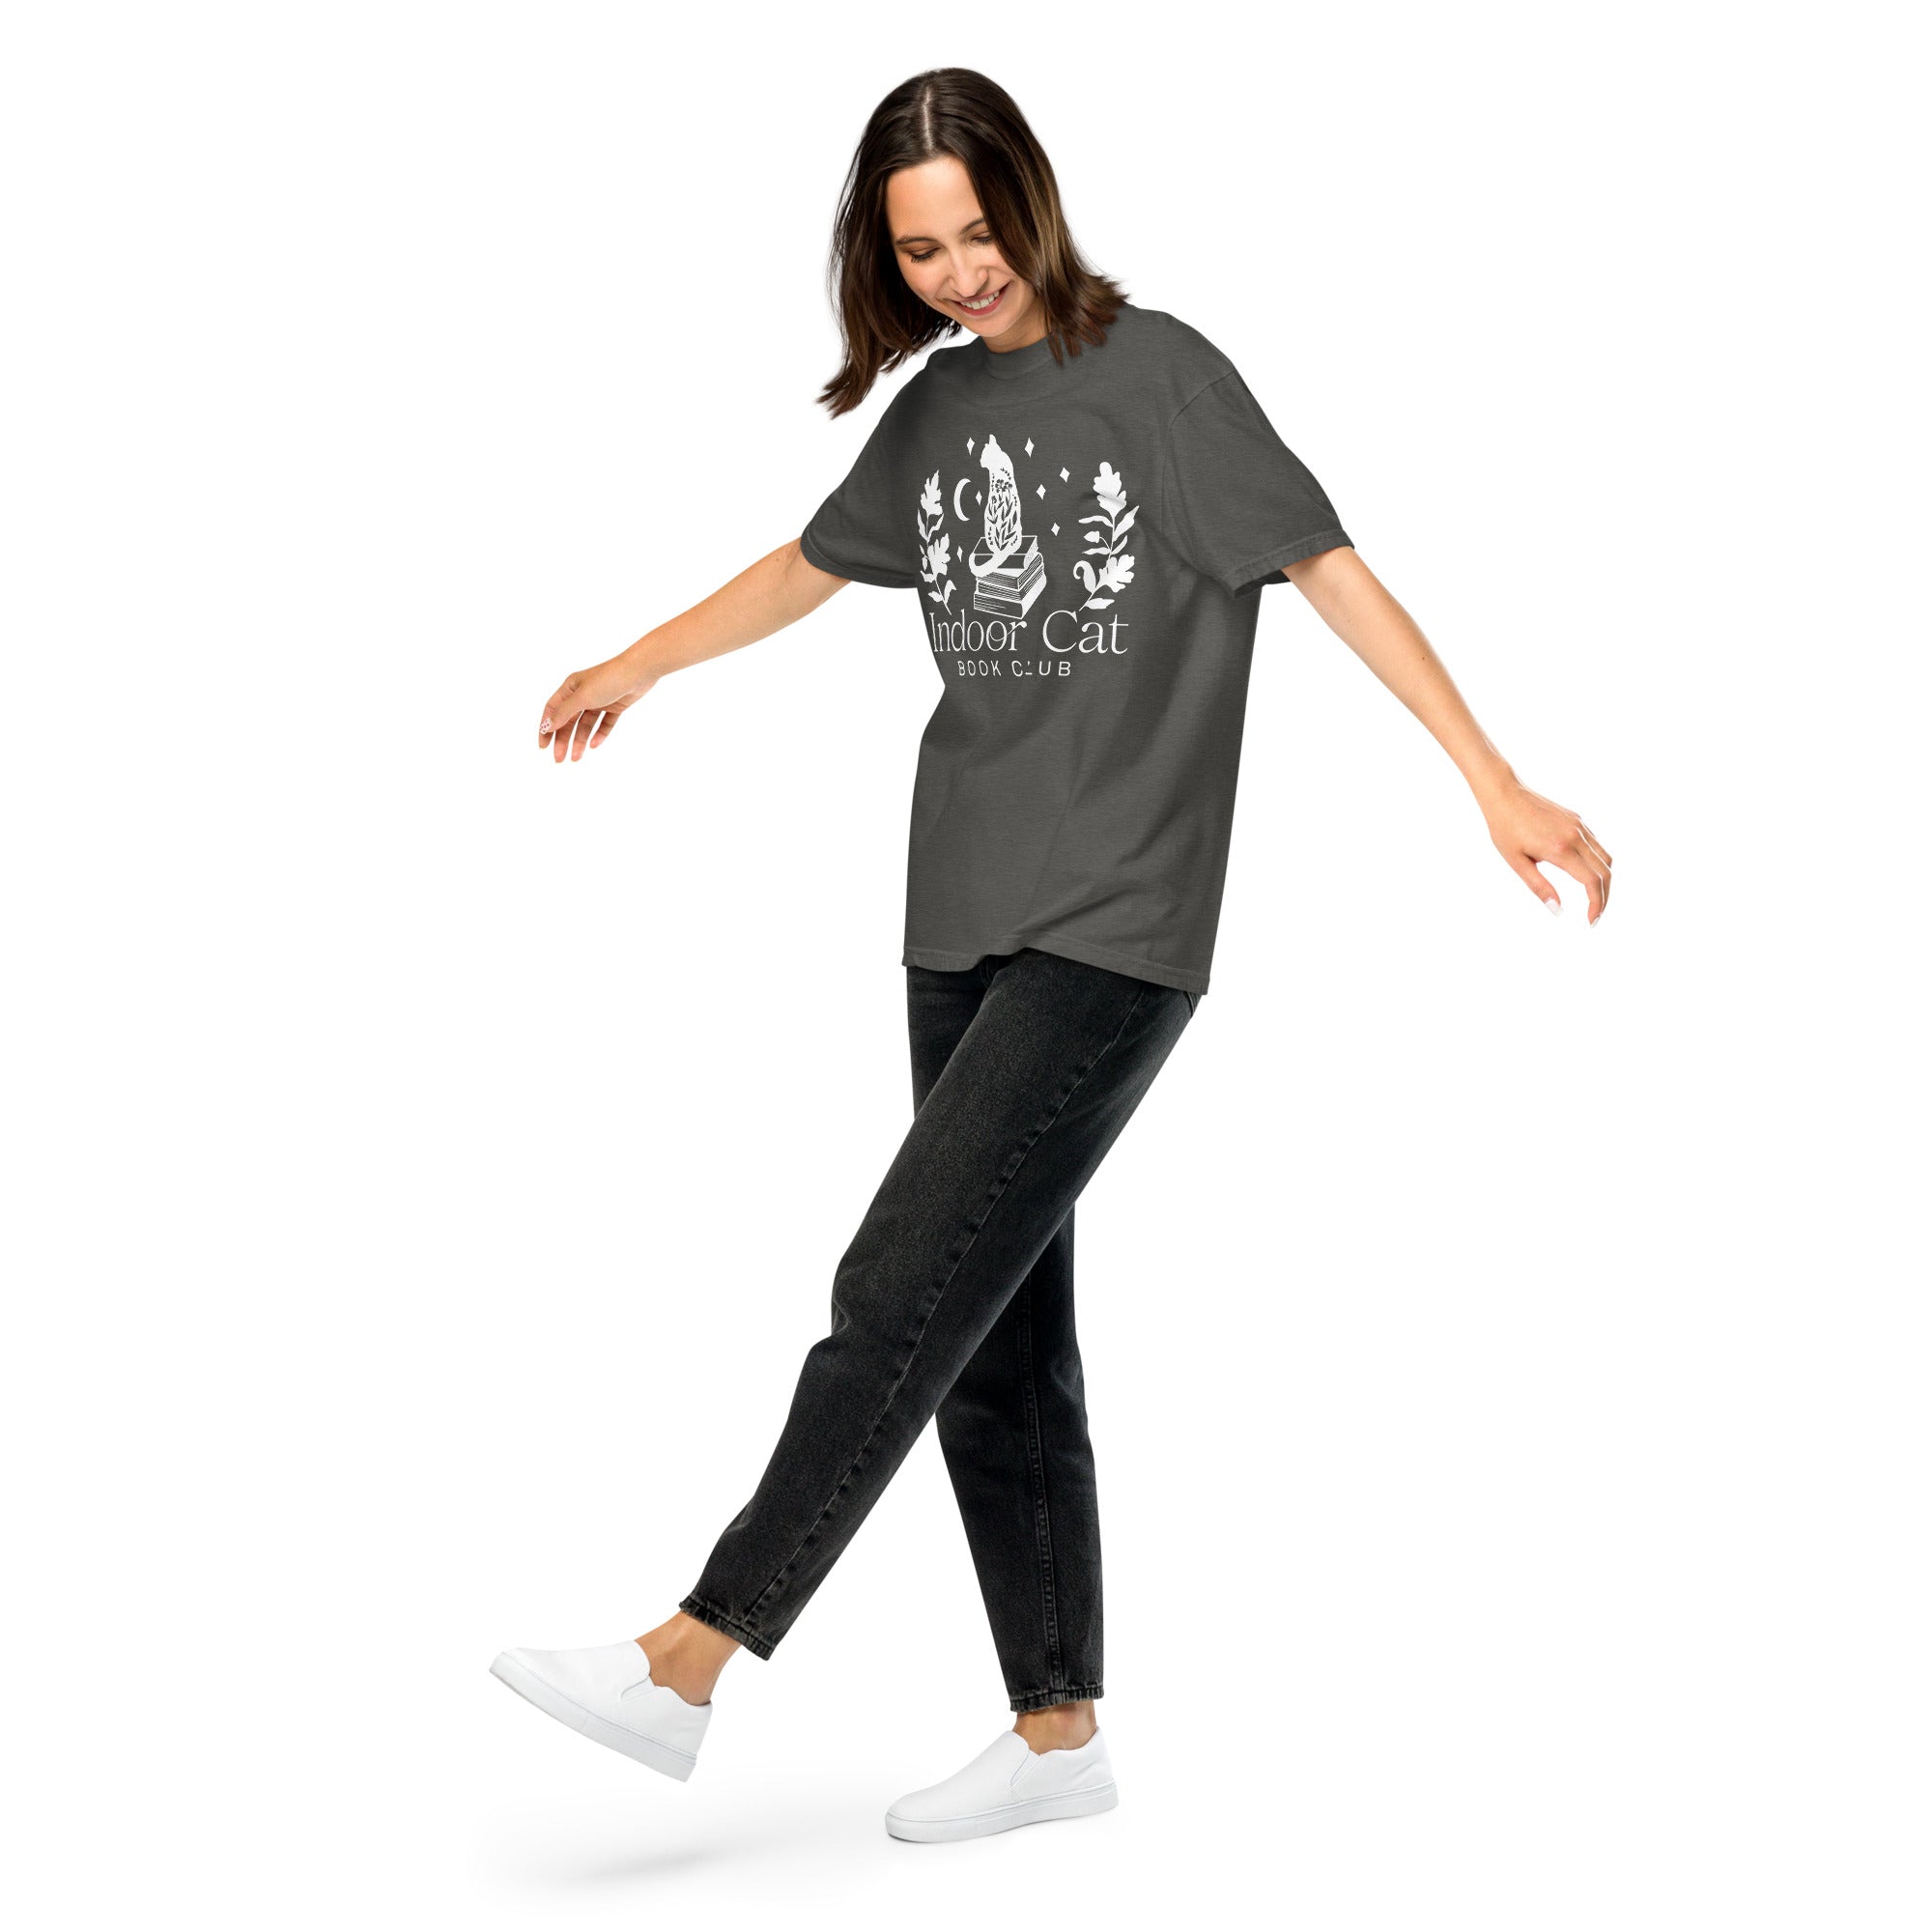 FireDrake Artistry™ Indoor Cat t-shirt, comfort colors brand in pepper, white design